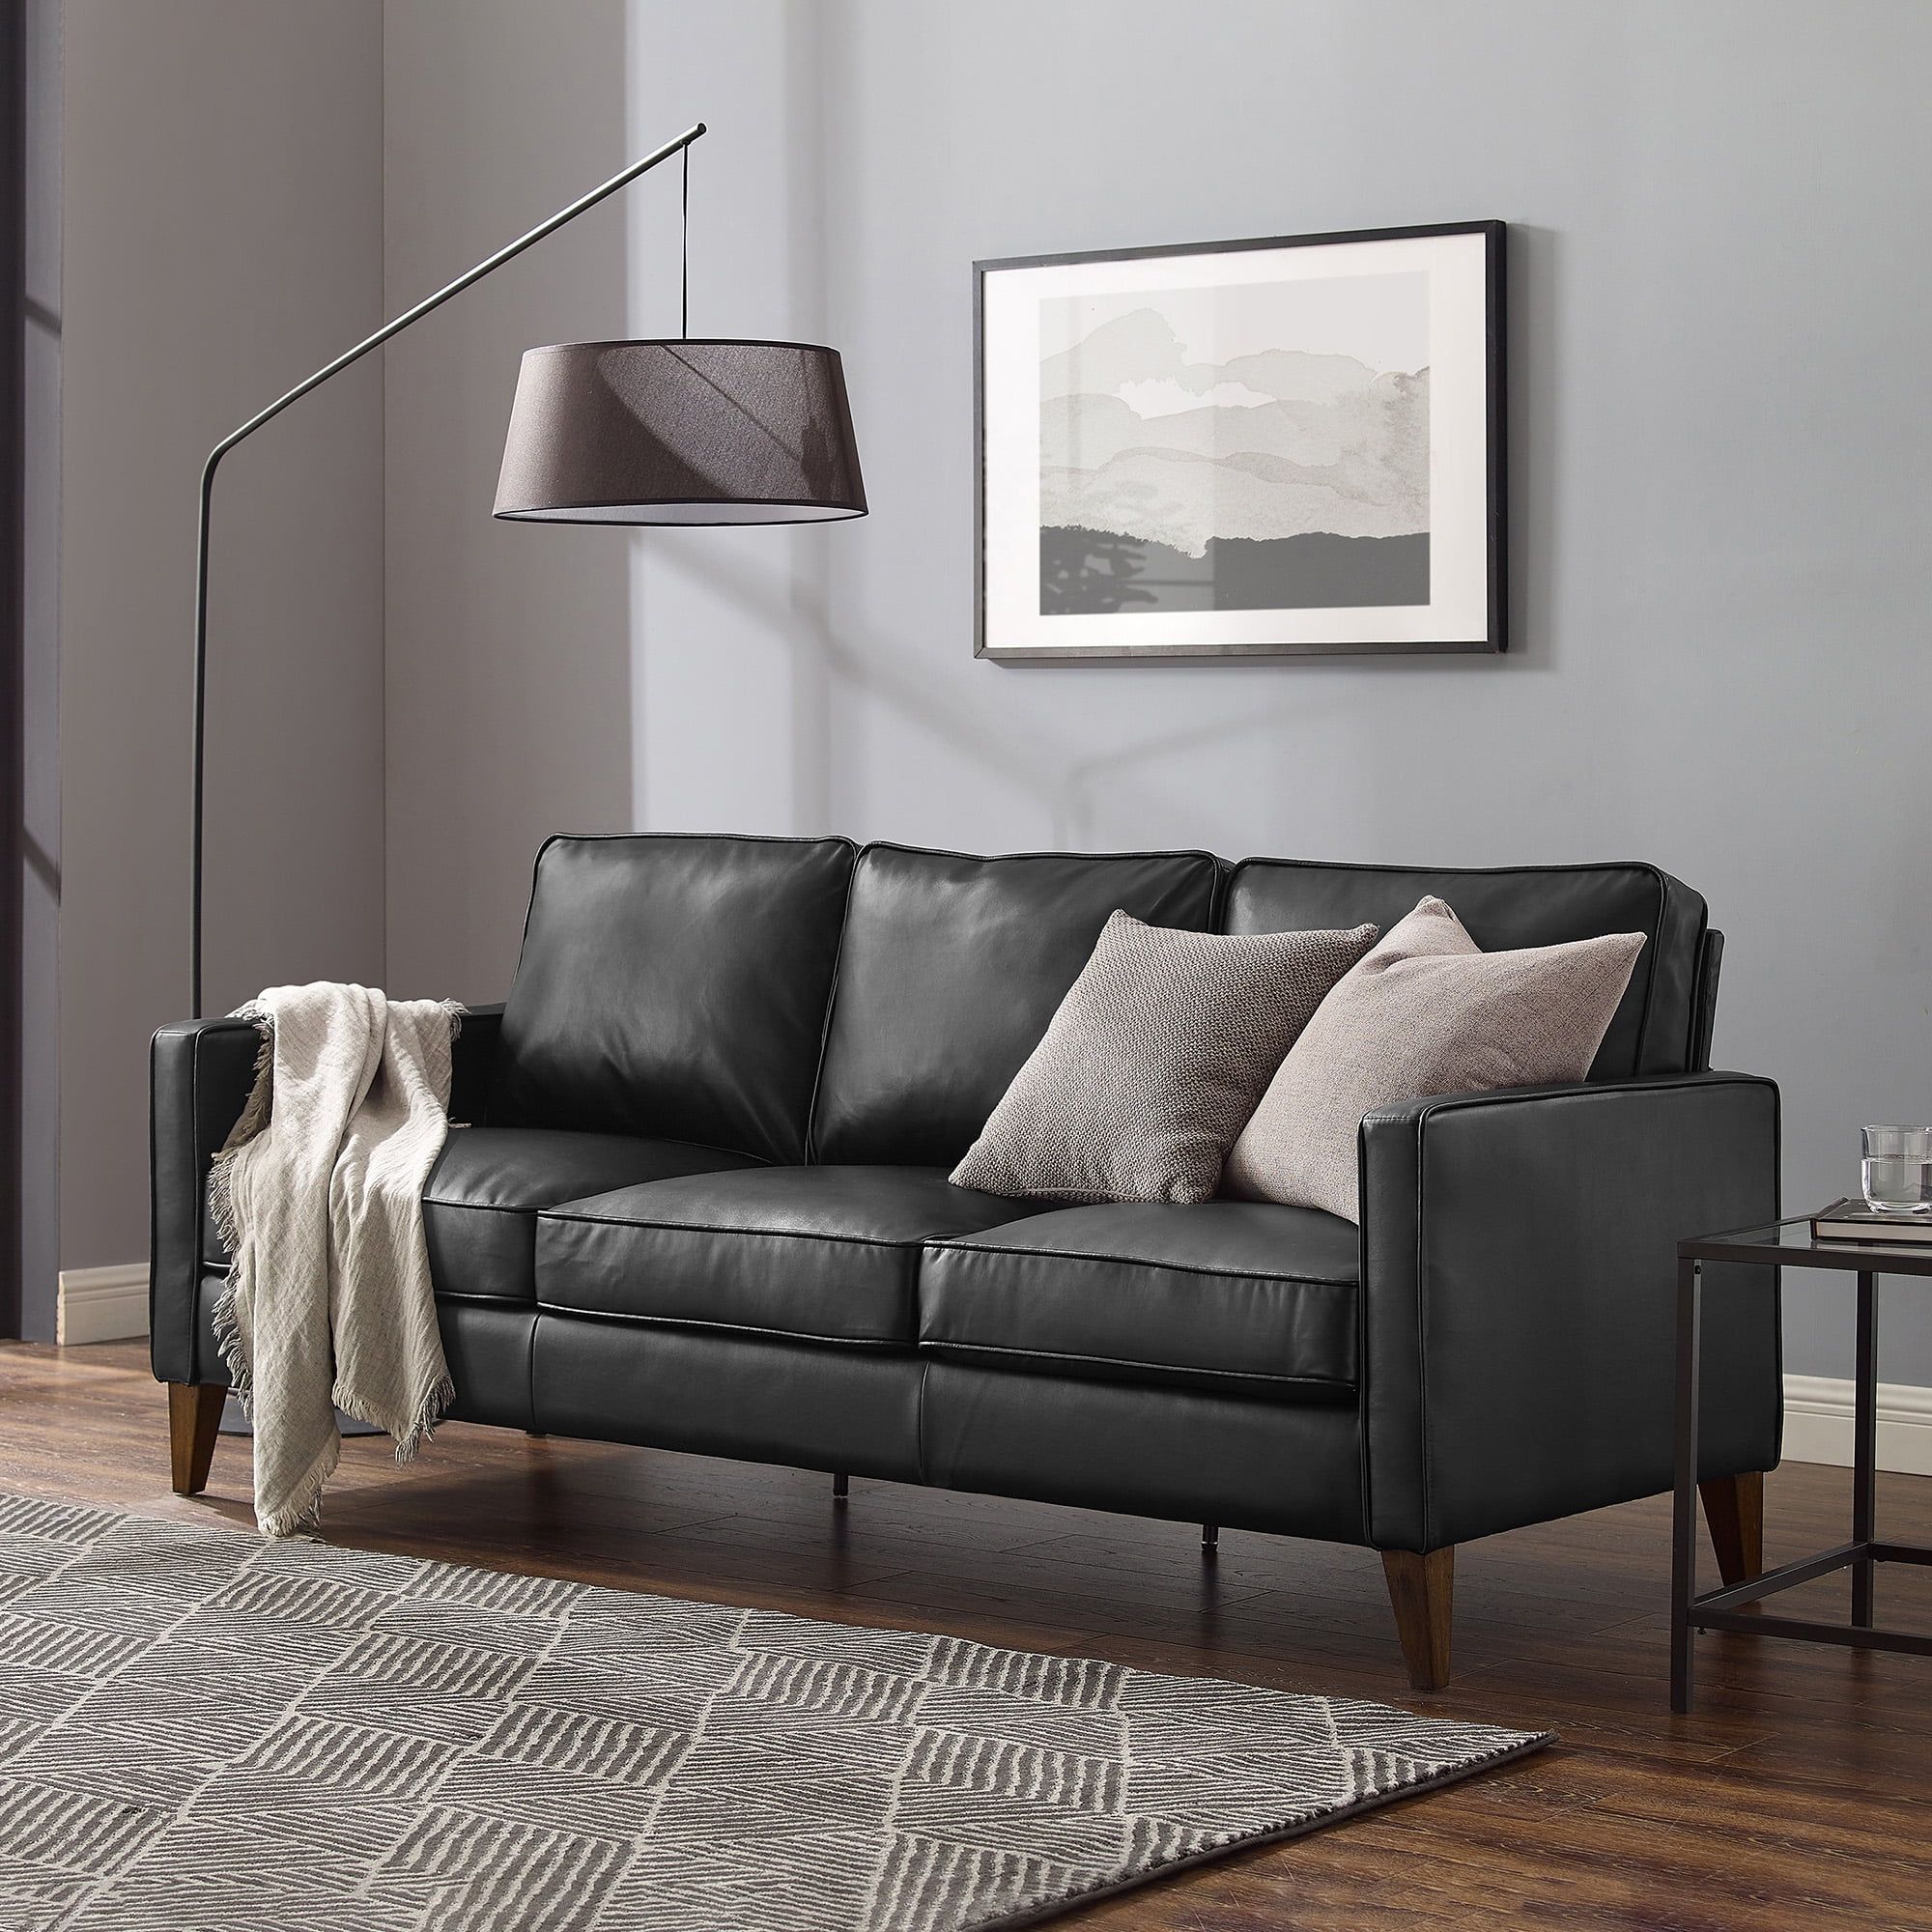 Hillsdale Jianna Faux Leather Sofa, Black – Walmart With Regard To Faux Leather Sofas (Photo 14 of 15)